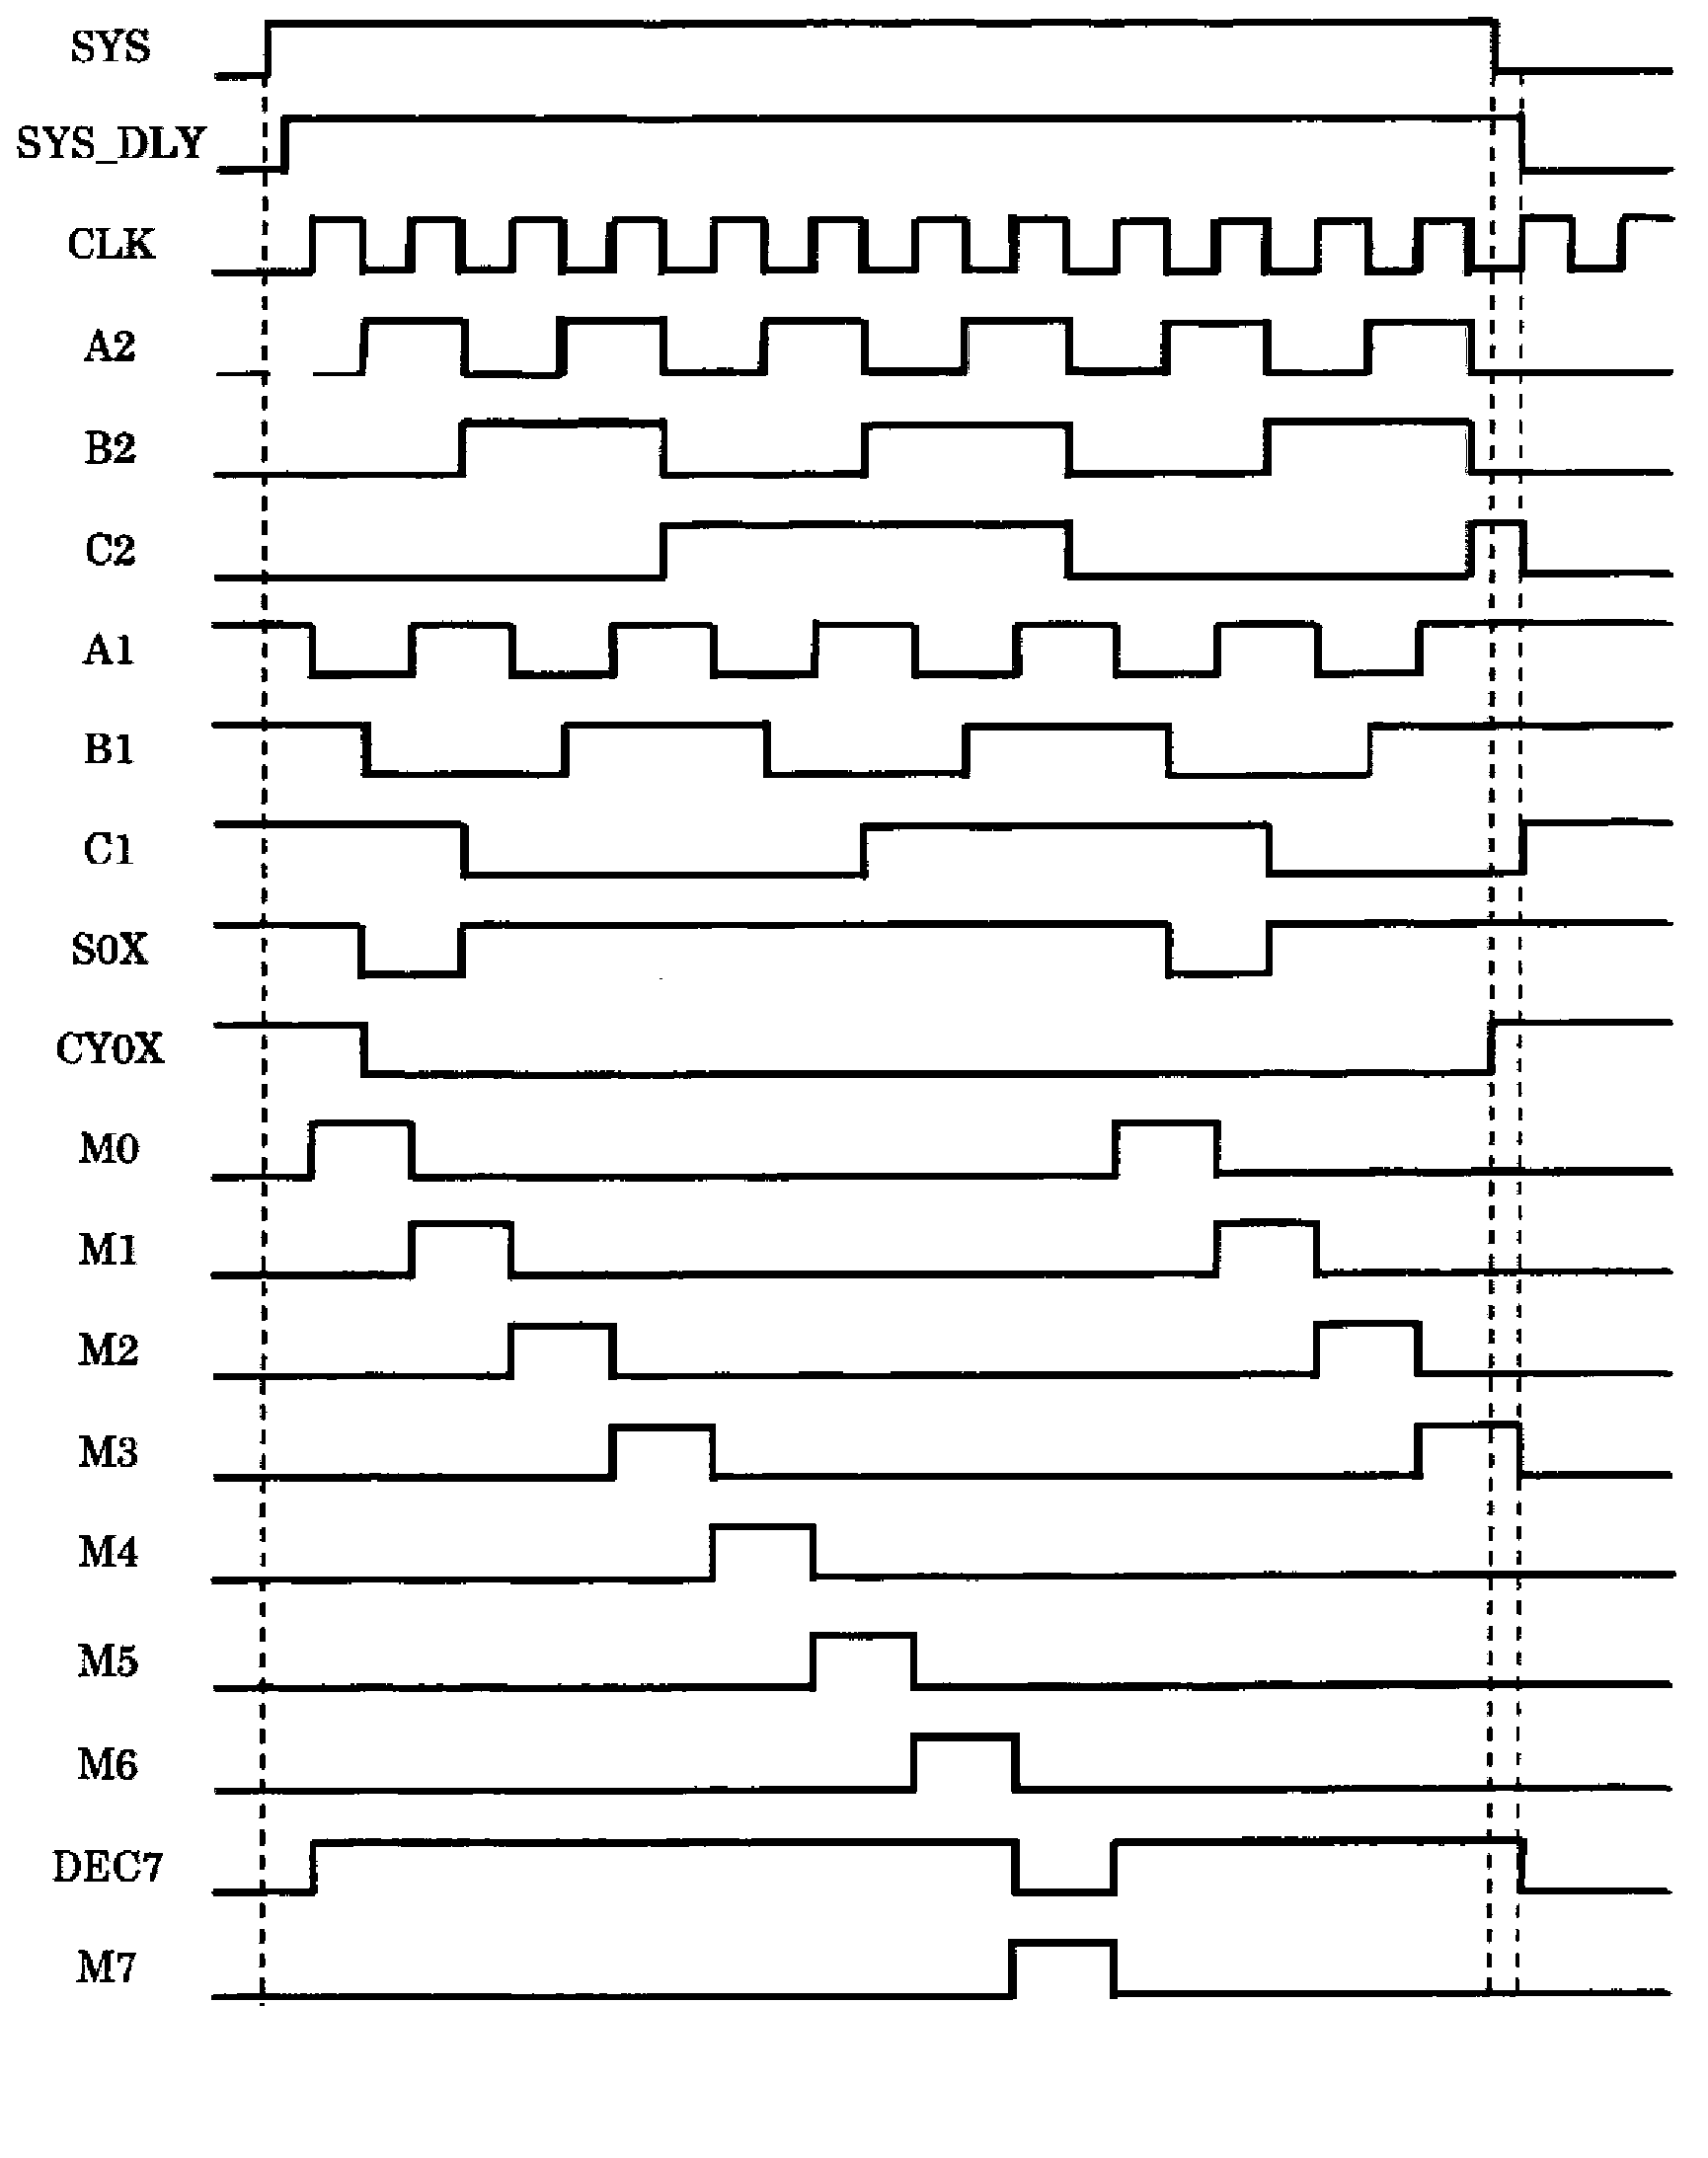 Timing generation circuit